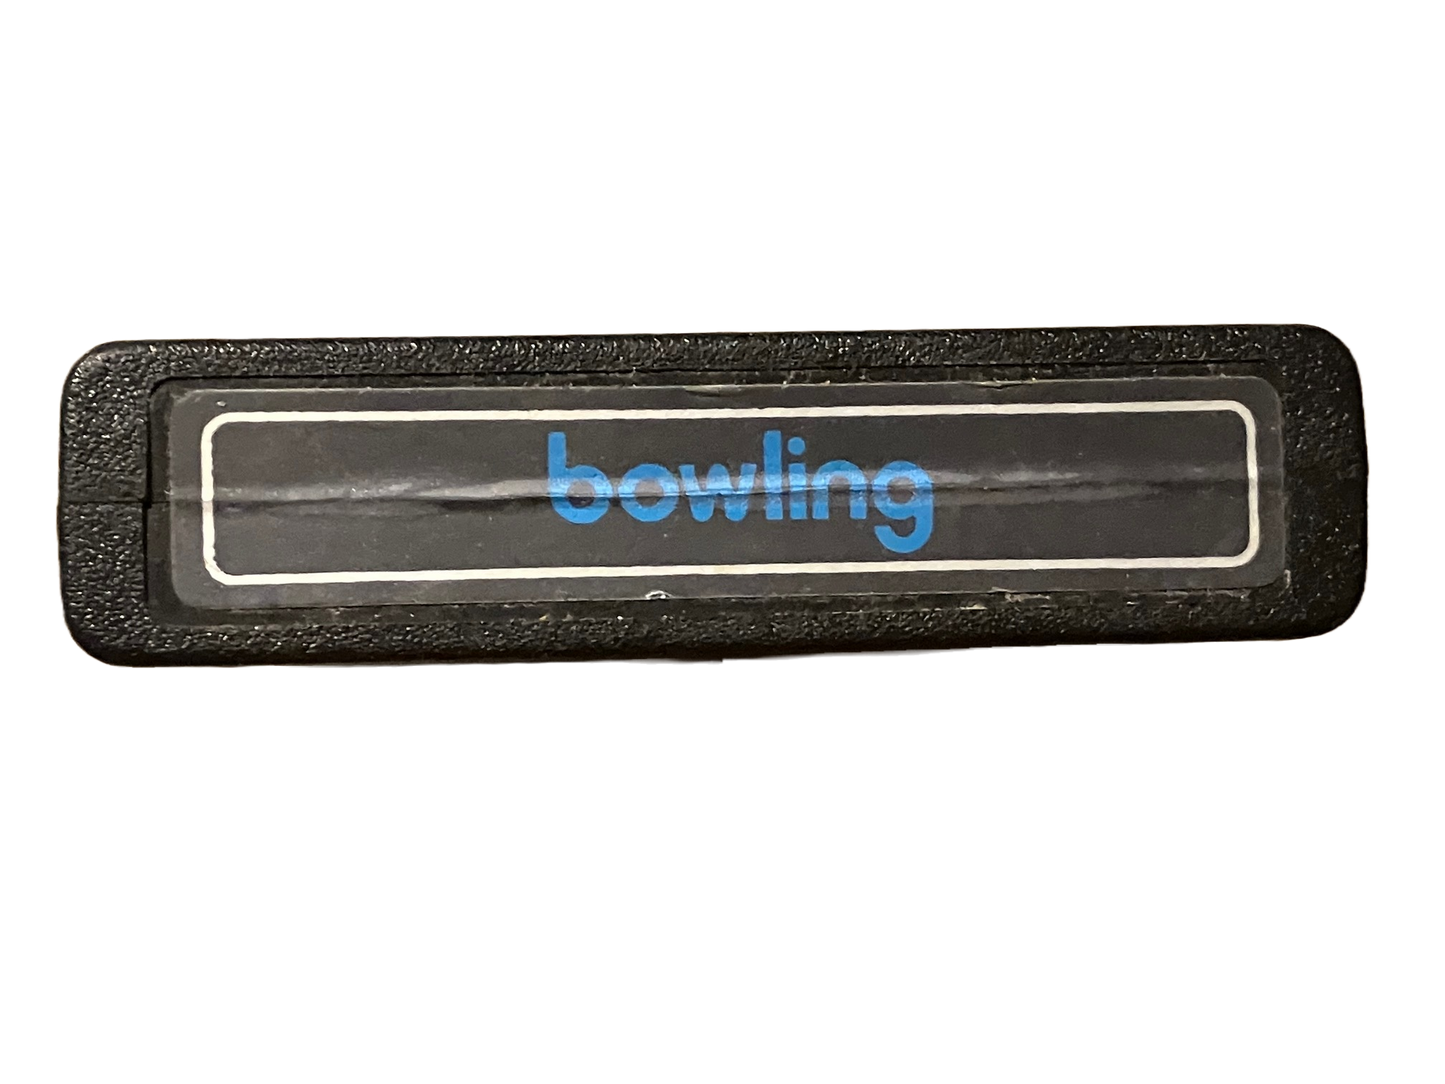 Bowling Atari 2600 Video Game